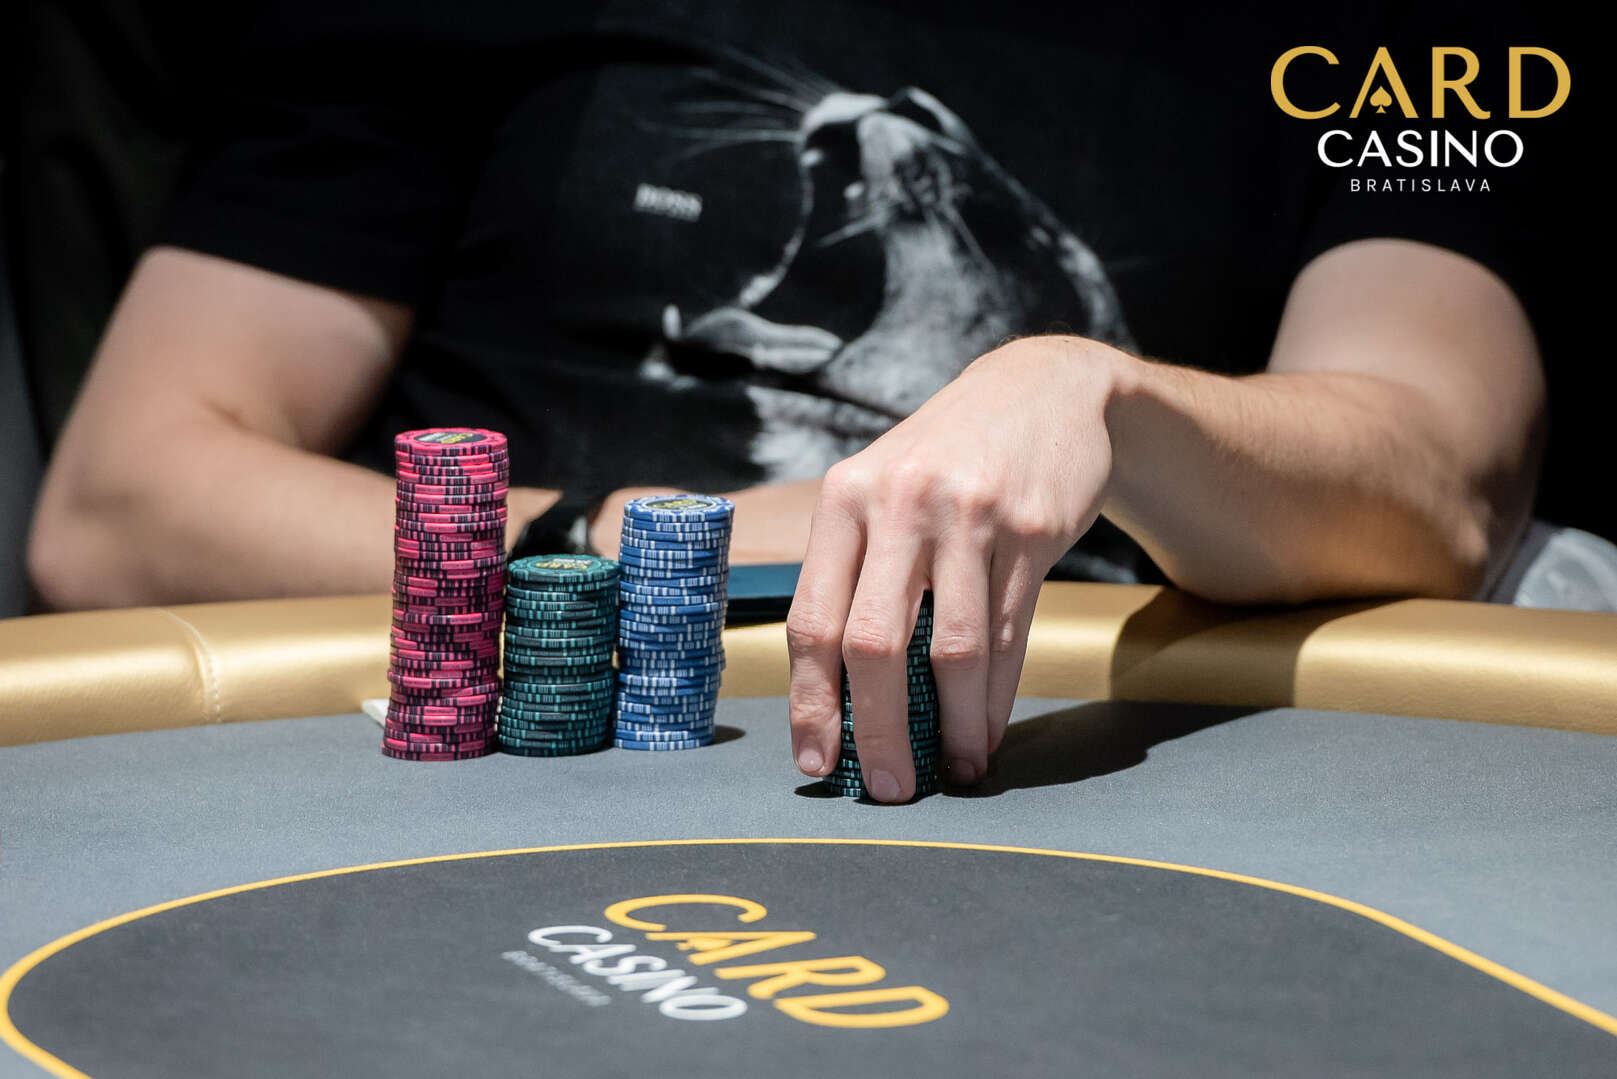 V Card Casino Bratislava dnes začína Benelux Poker Tour s 200.000€ garanciou!
